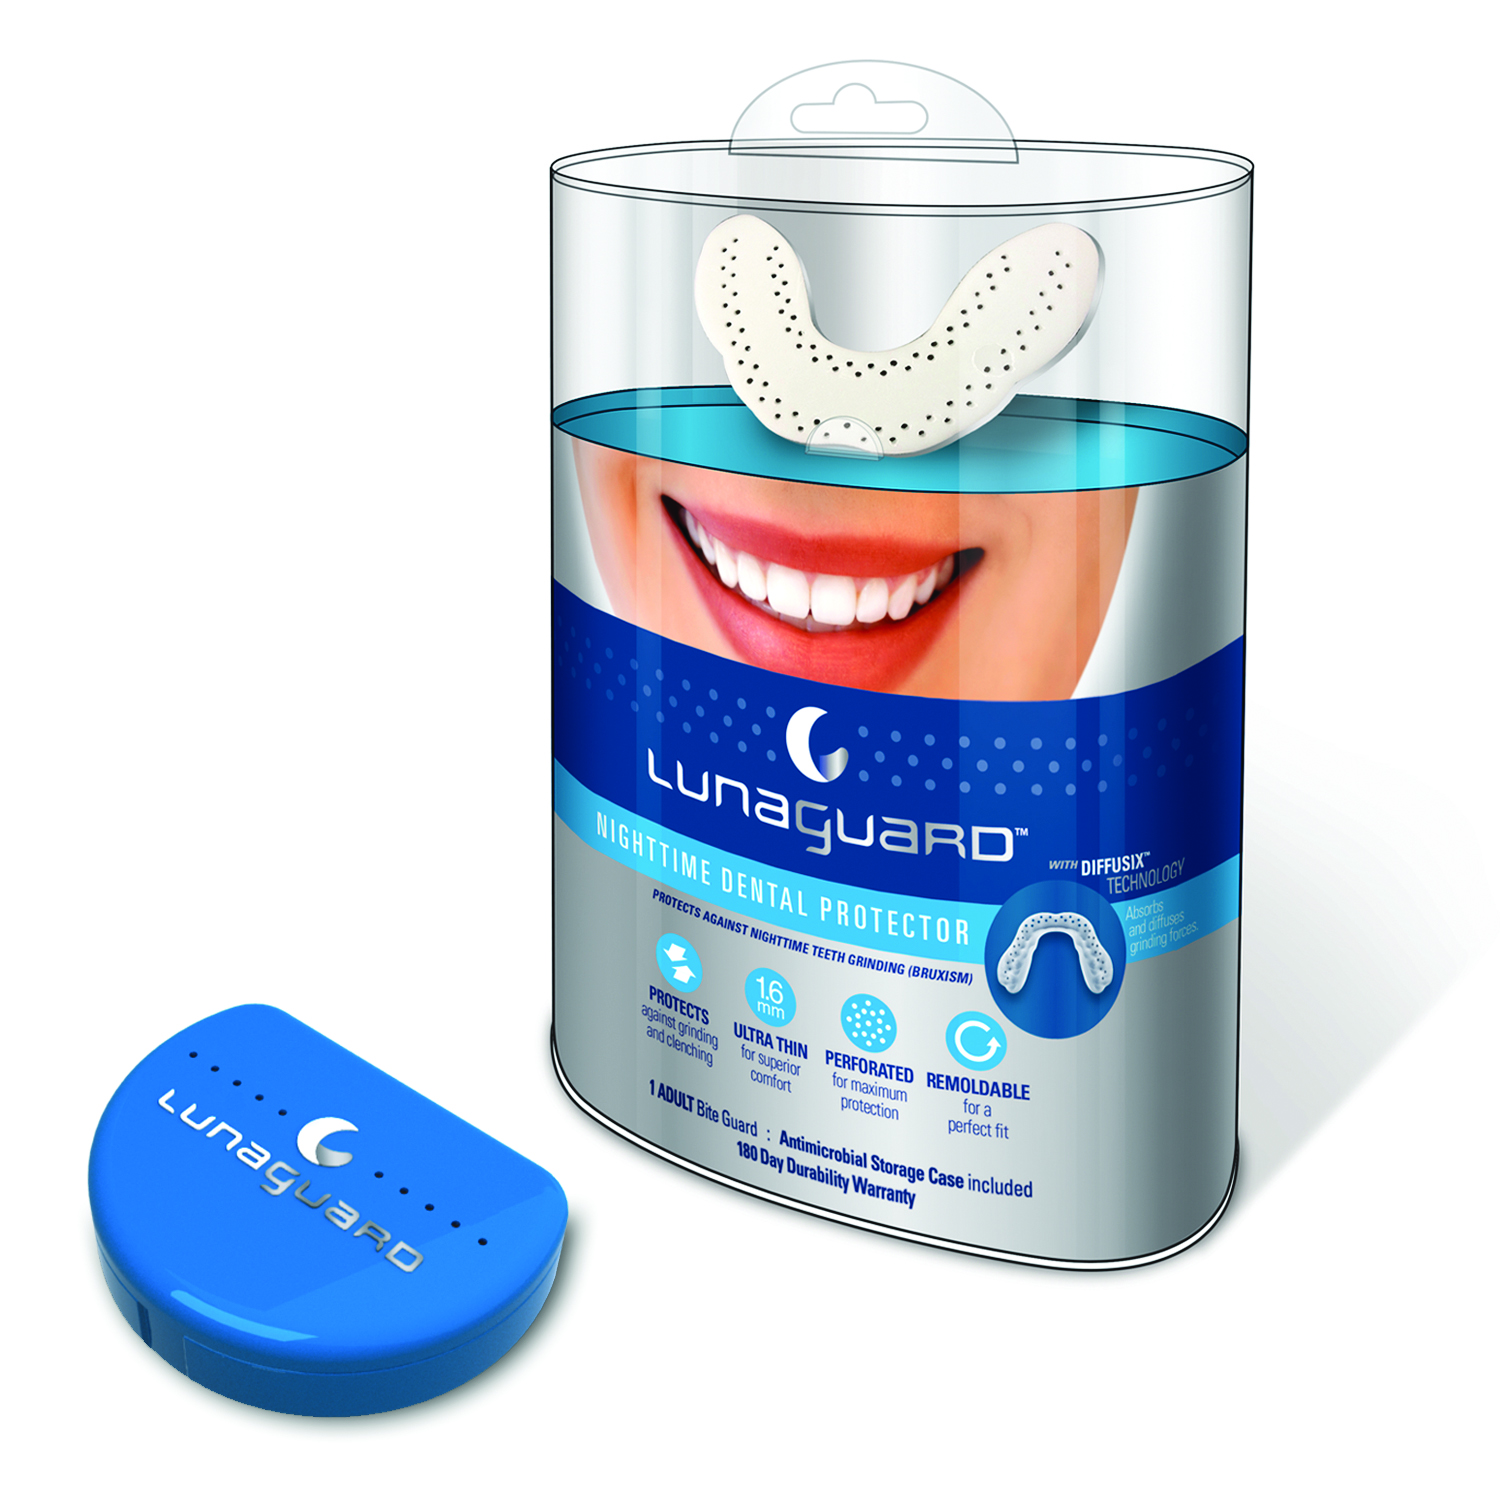 Lunaguard™ Nighttime Dental Protector Includes Antimicrobial Storage Case